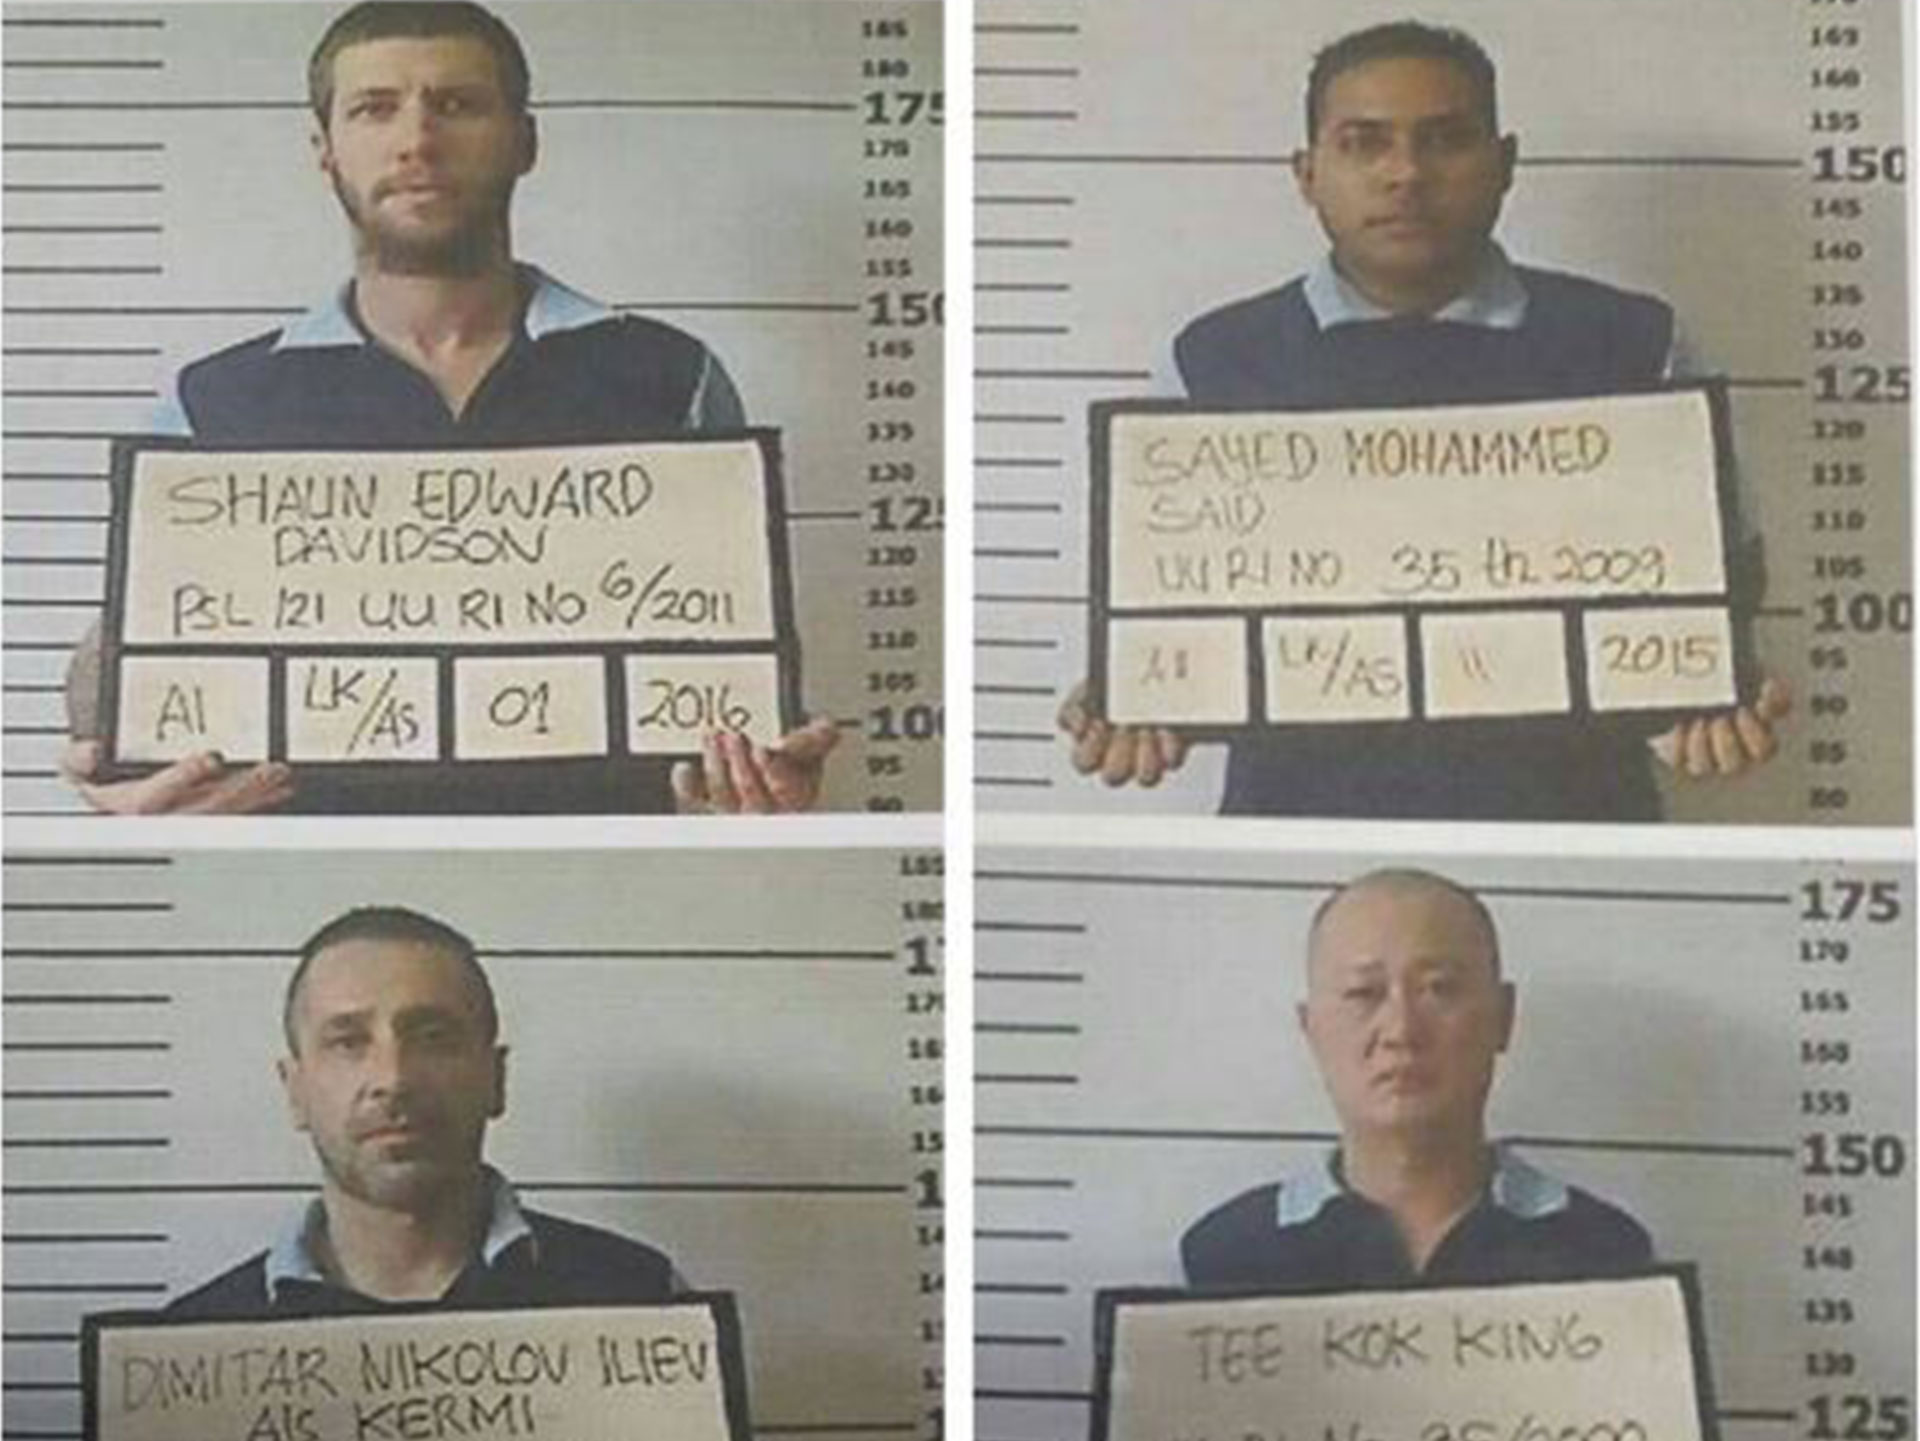 Shaun Edward Davidson, Tee Kok King, Kerobokan jail, Dimitar Nikolov Iliev, Sayed Mohammed Said